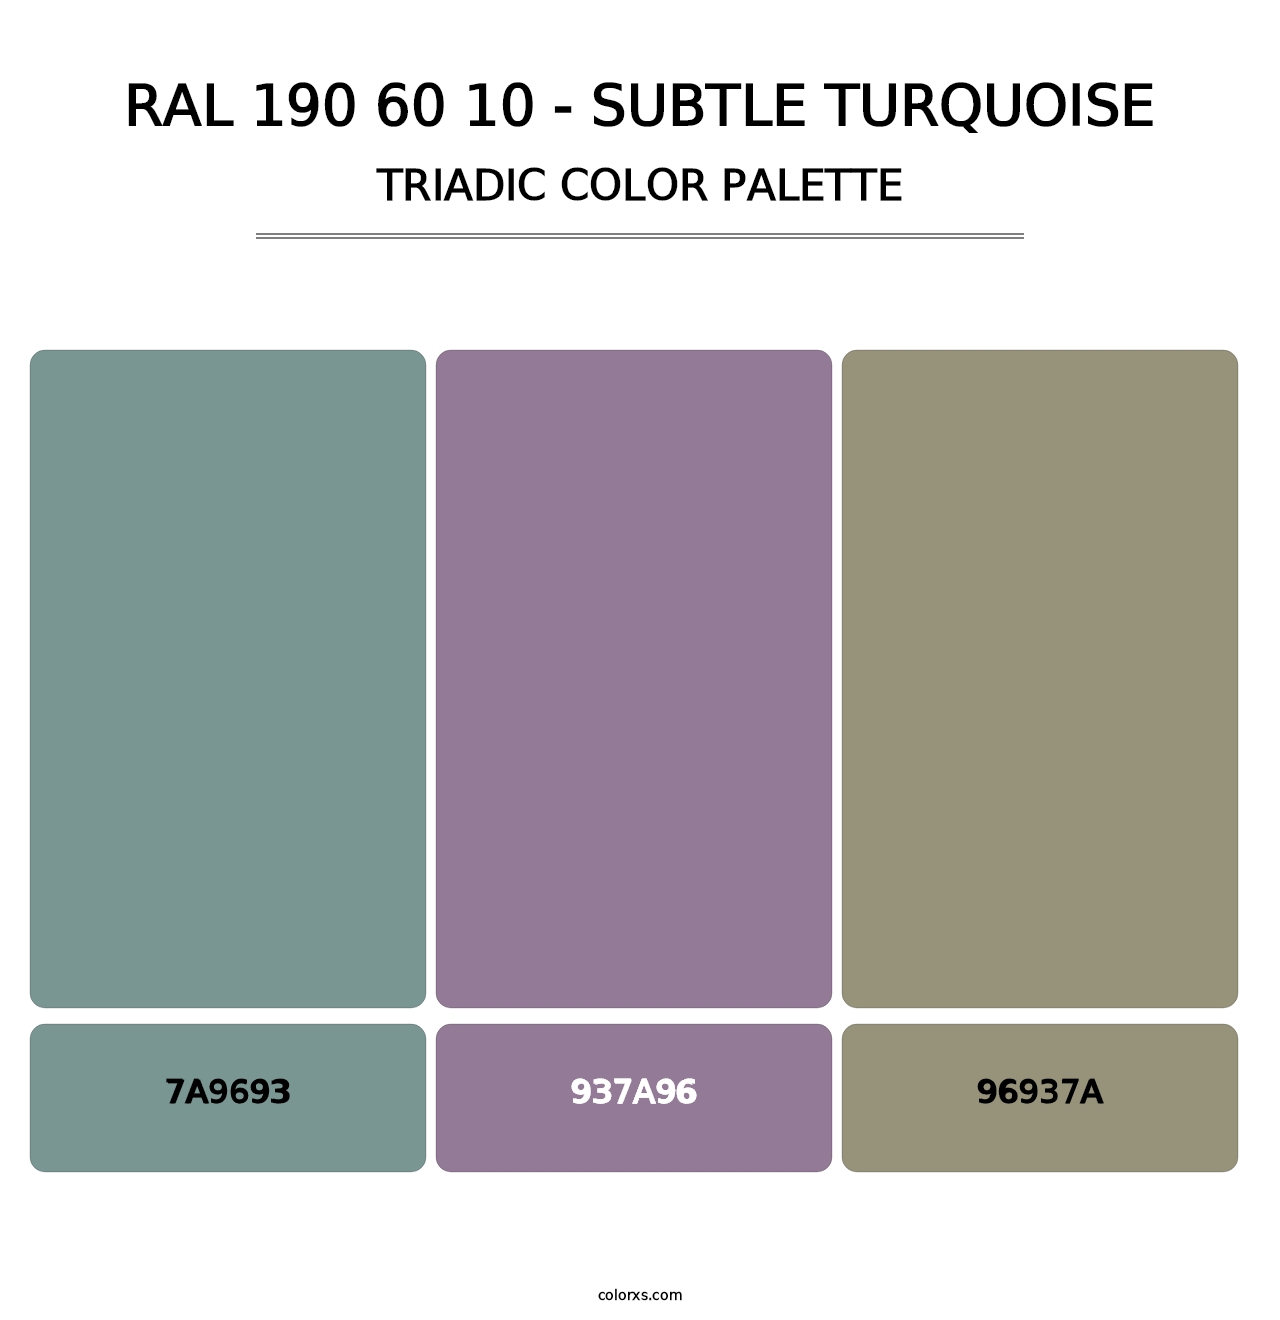 RAL 190 60 10 - Subtle Turquoise - Triadic Color Palette